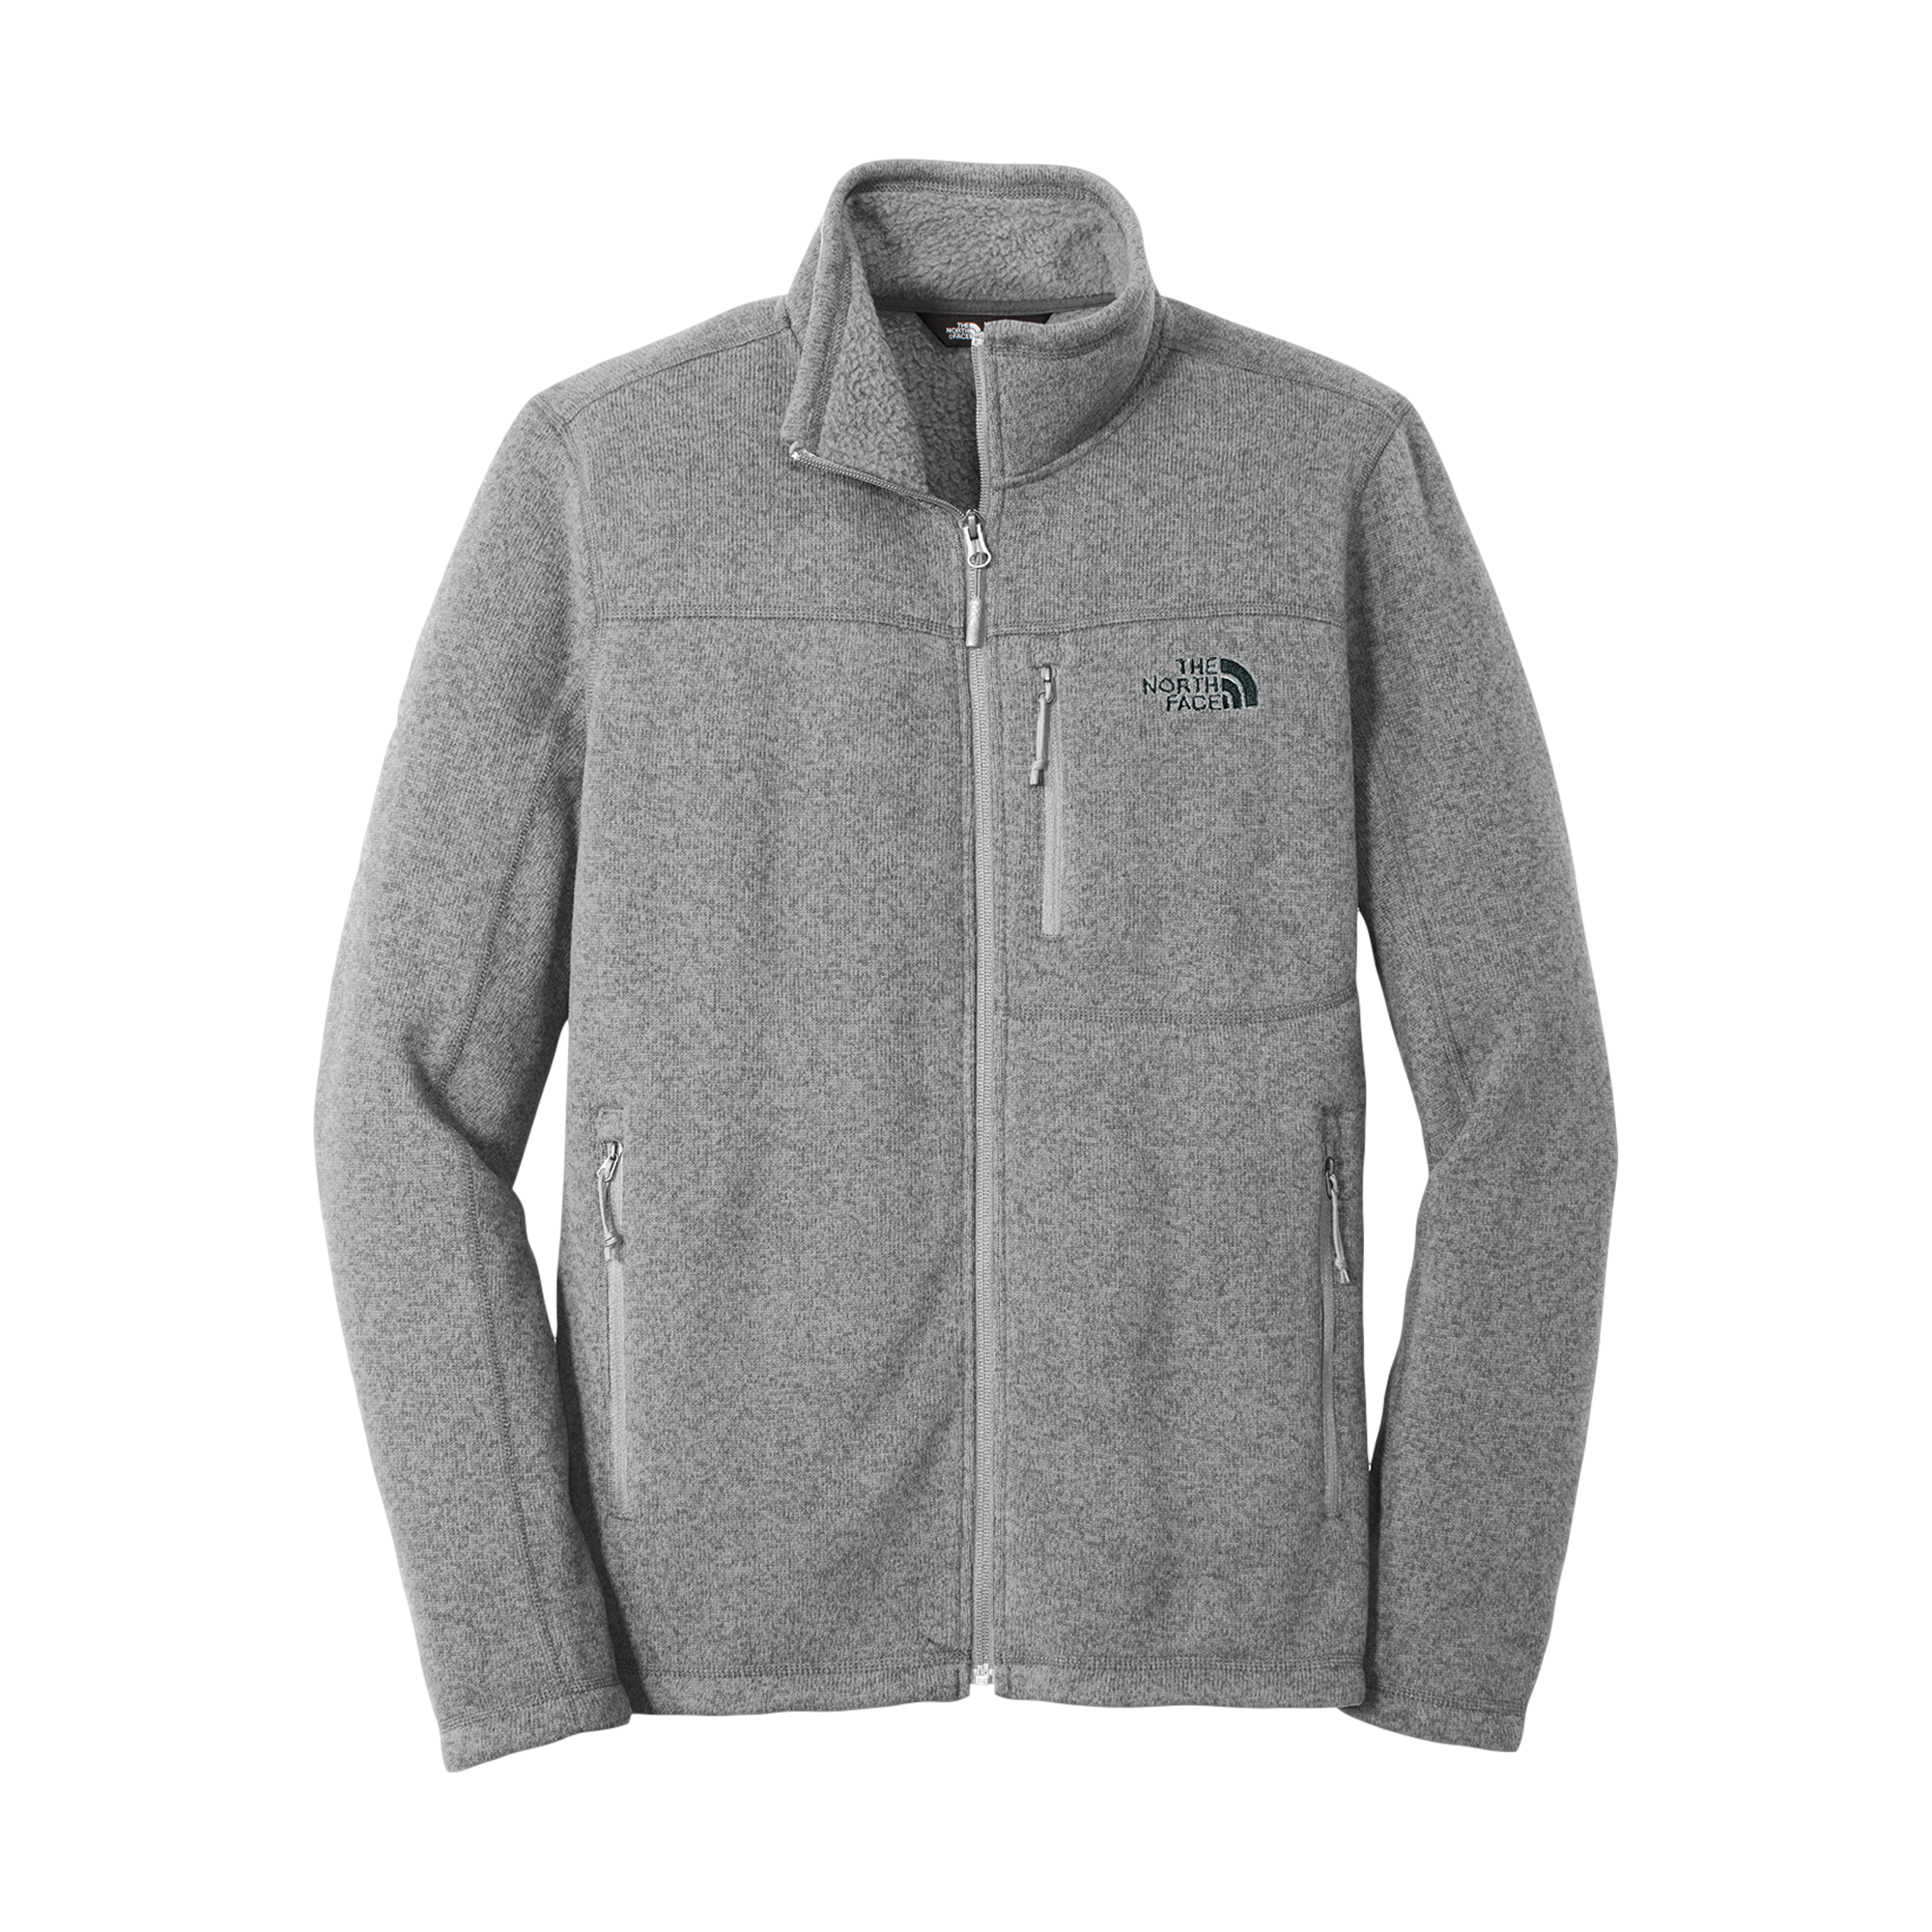 Customized The North Face Sweater Fleece Jacket (Men's/Unisex ...